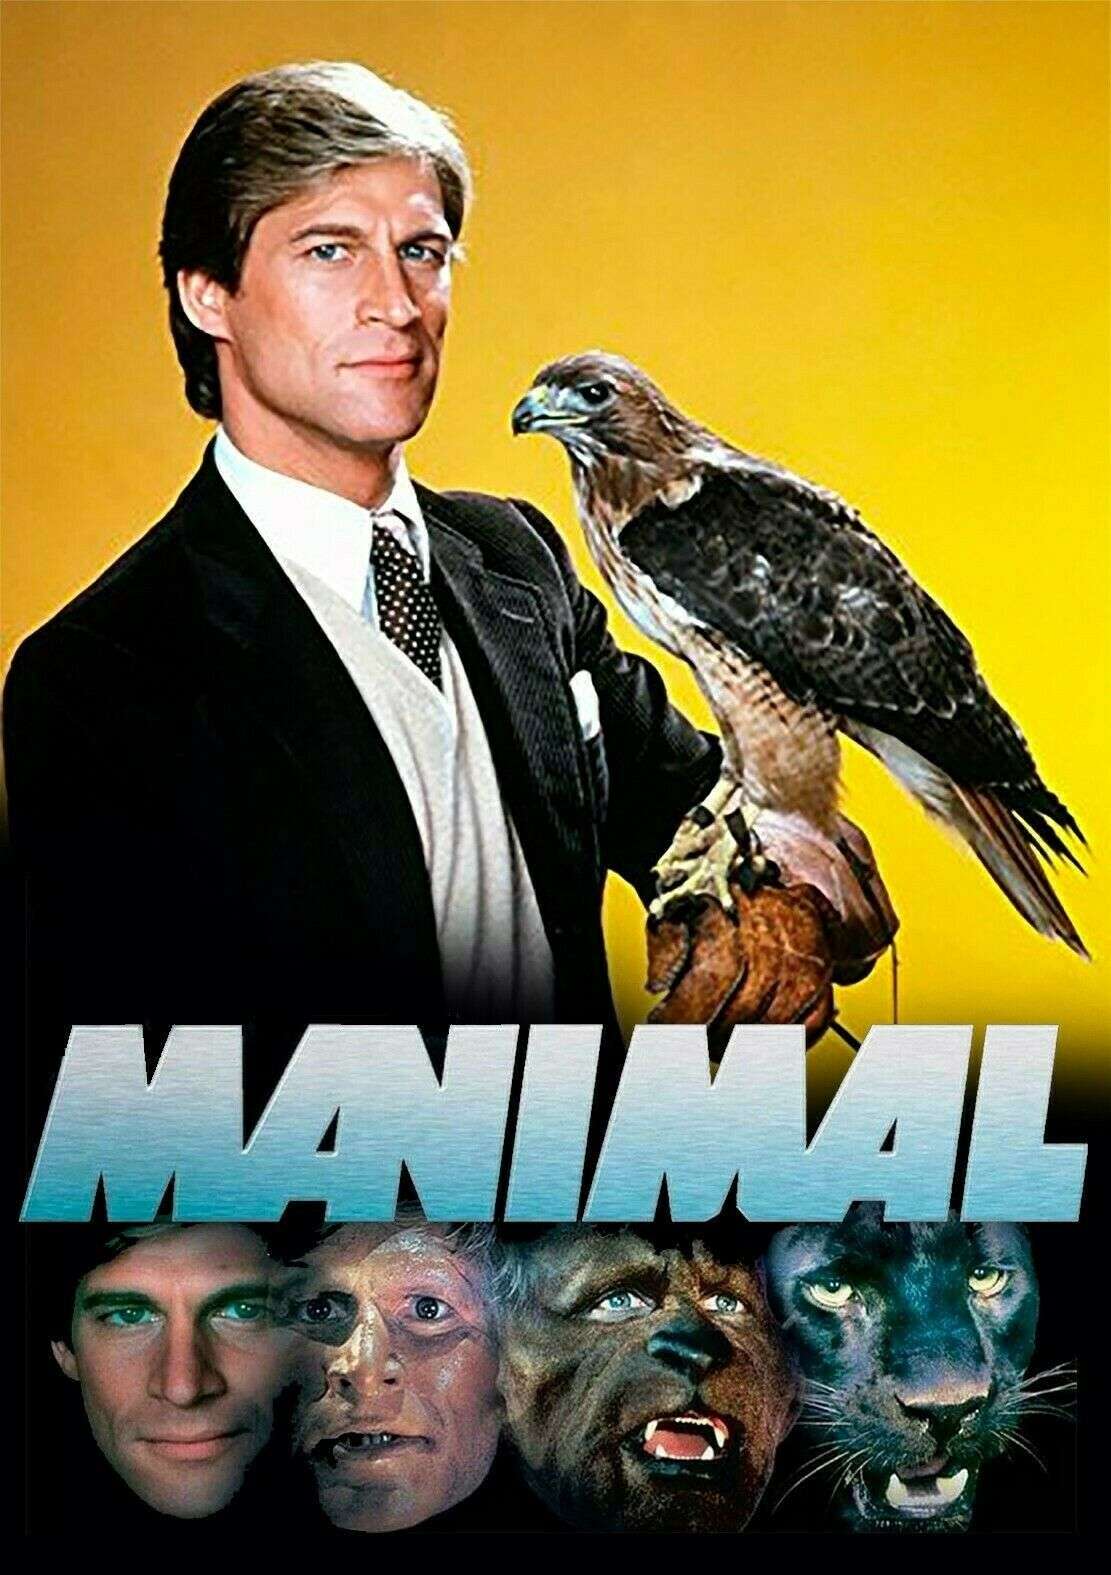 Manimal (1983)